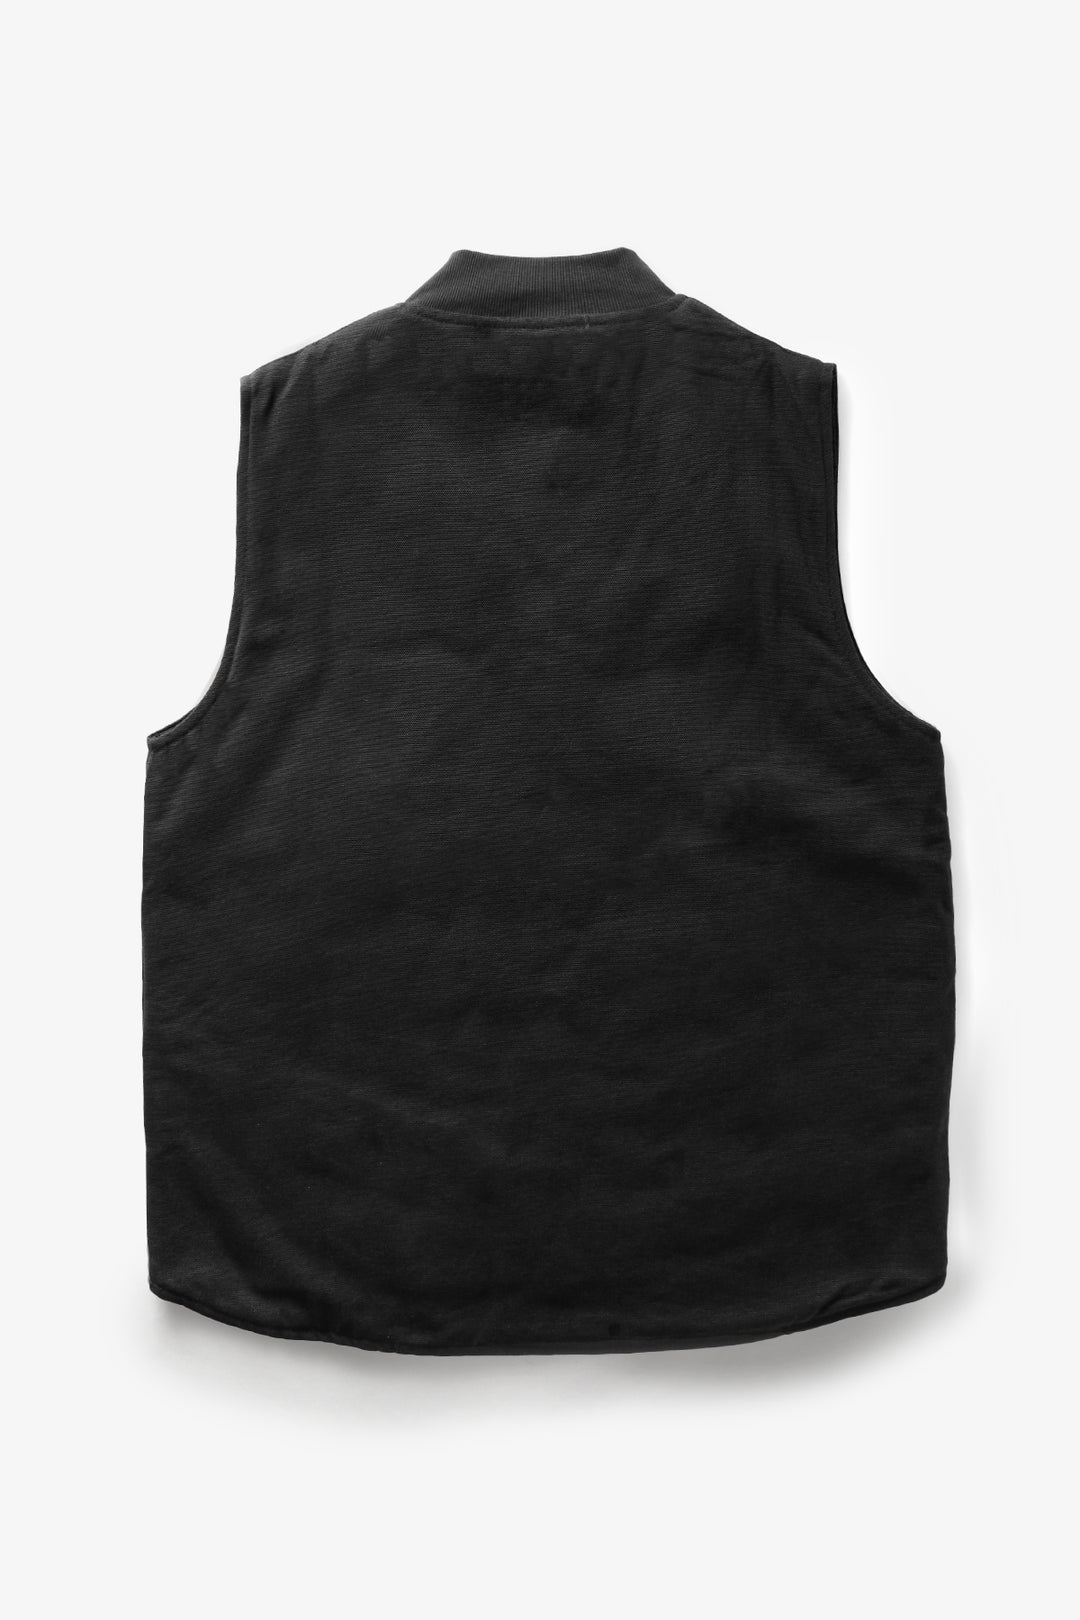 Power Goods - Canvas Work Vest - Black